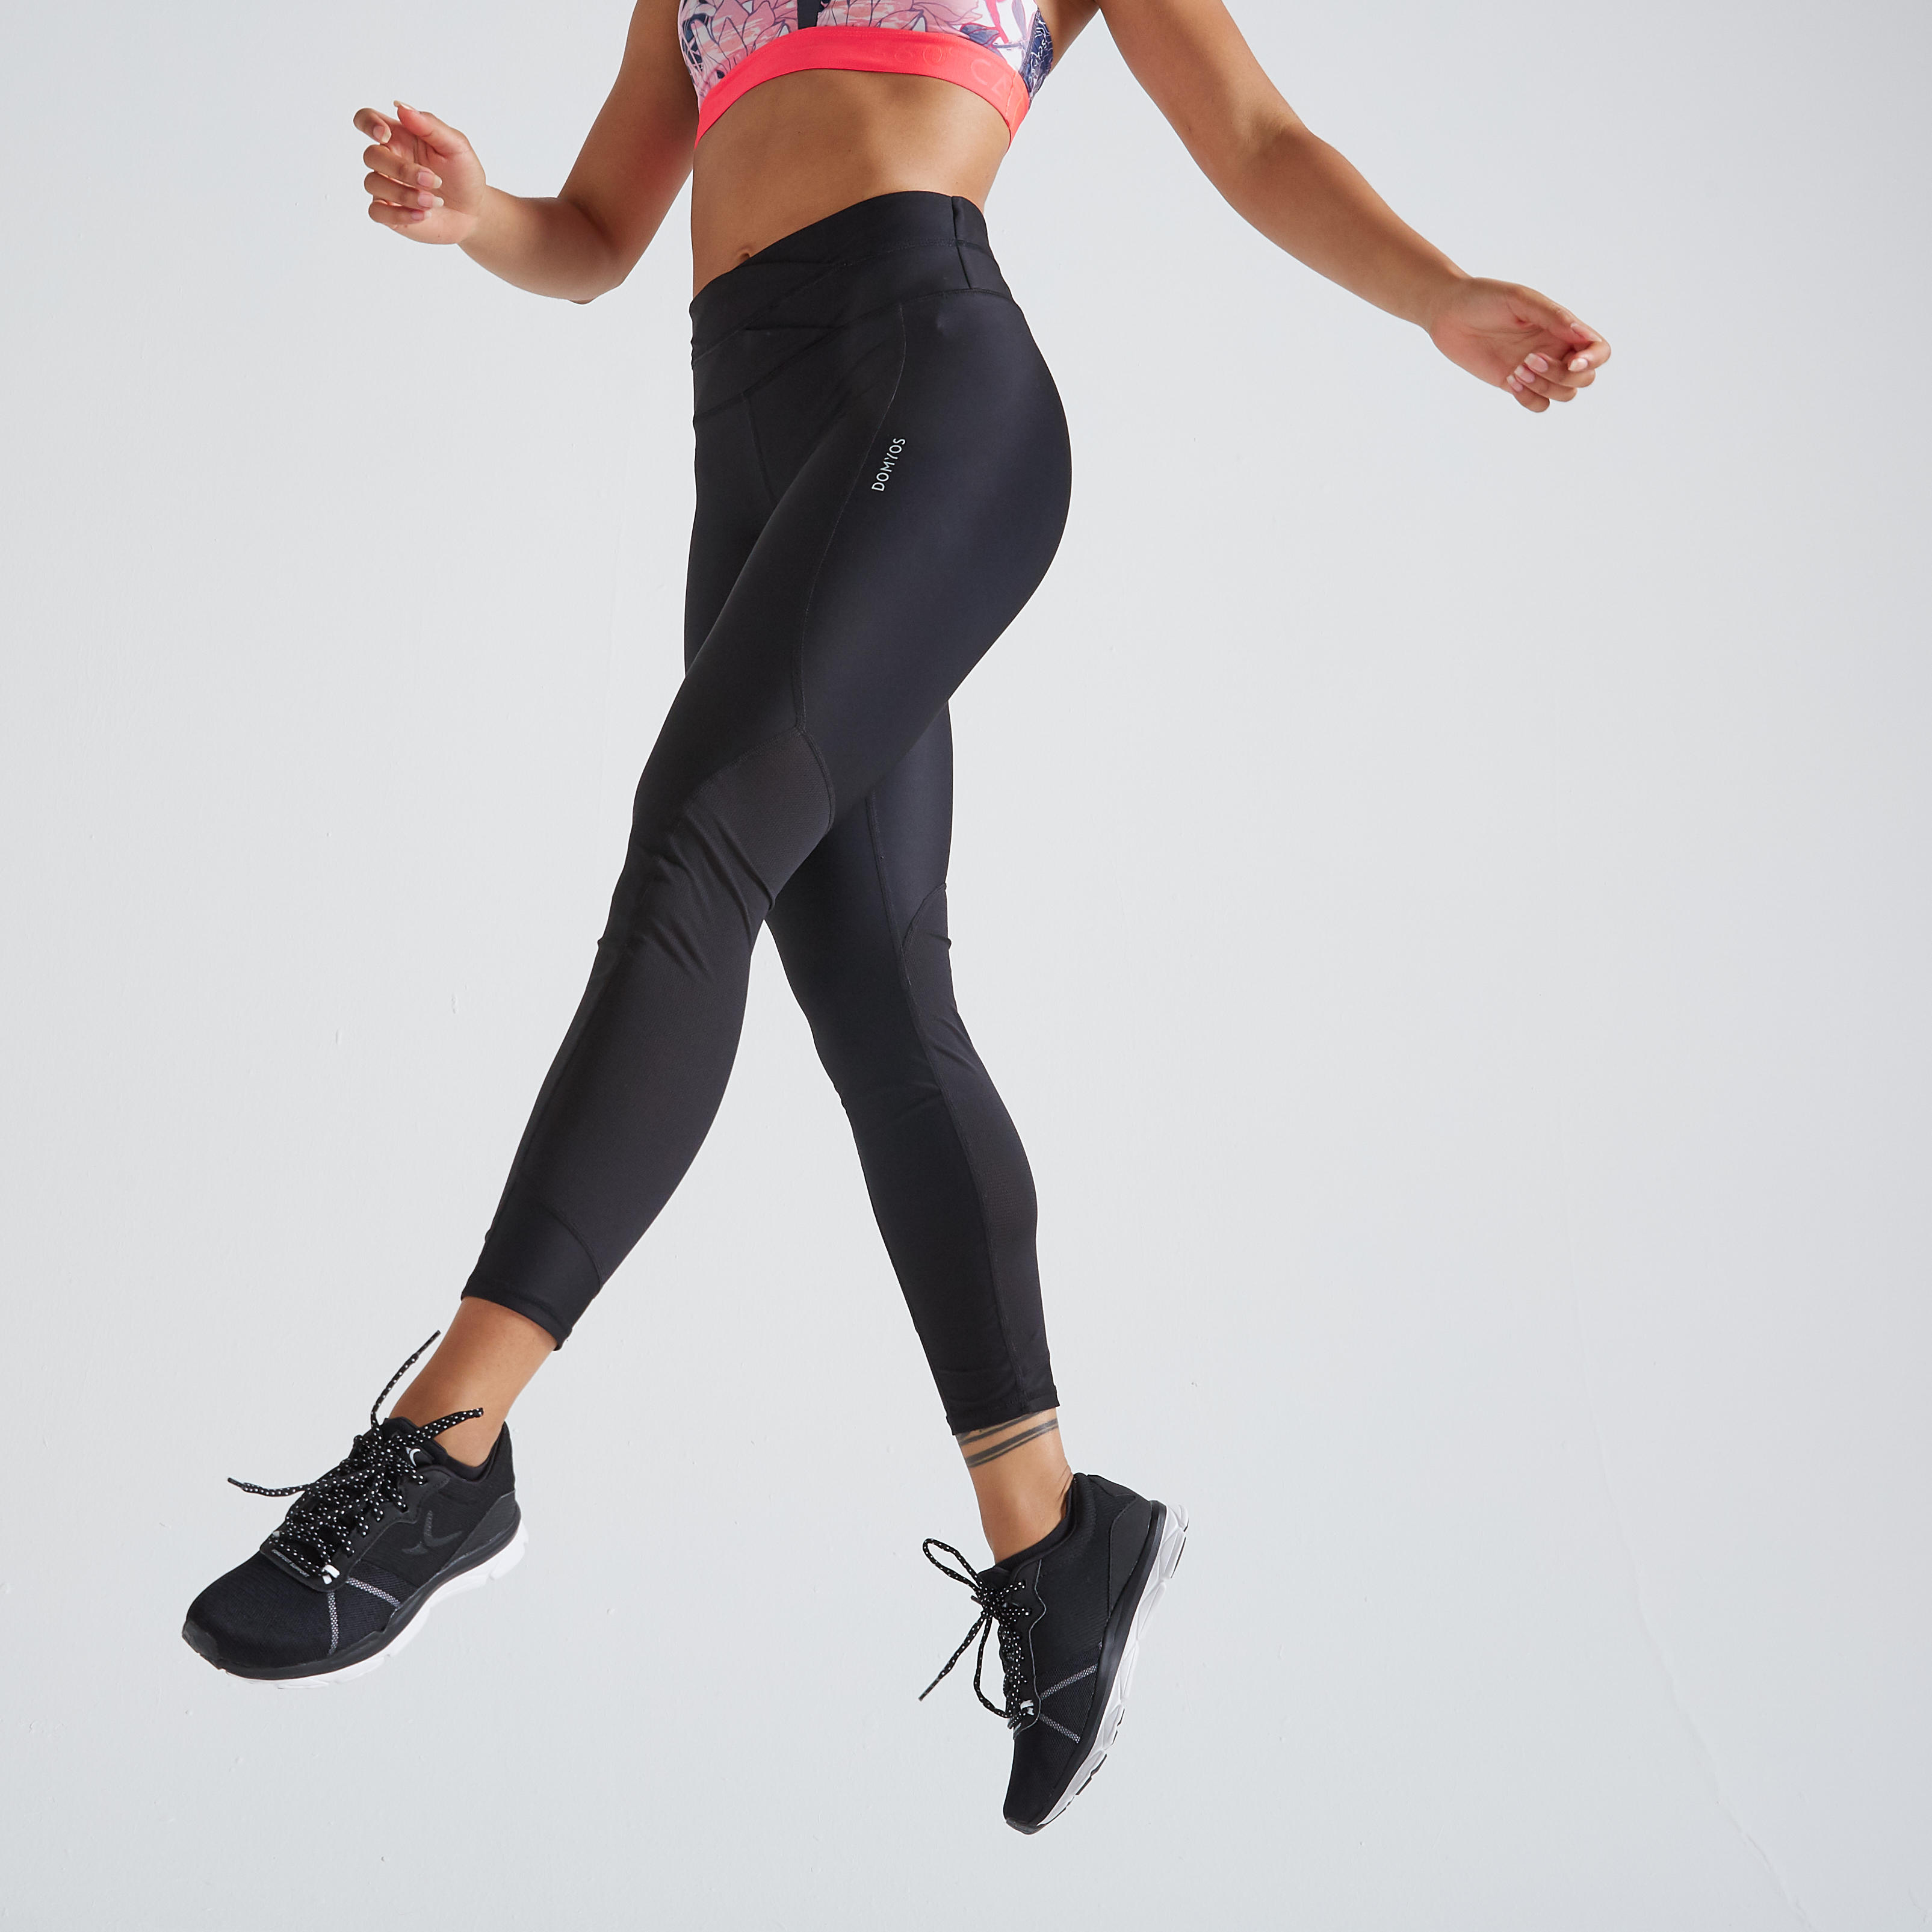 Decathlon Fitness Girls Breathable Leggings S500 (Has Pocket, Stretchable)  - Domyos | Lazada